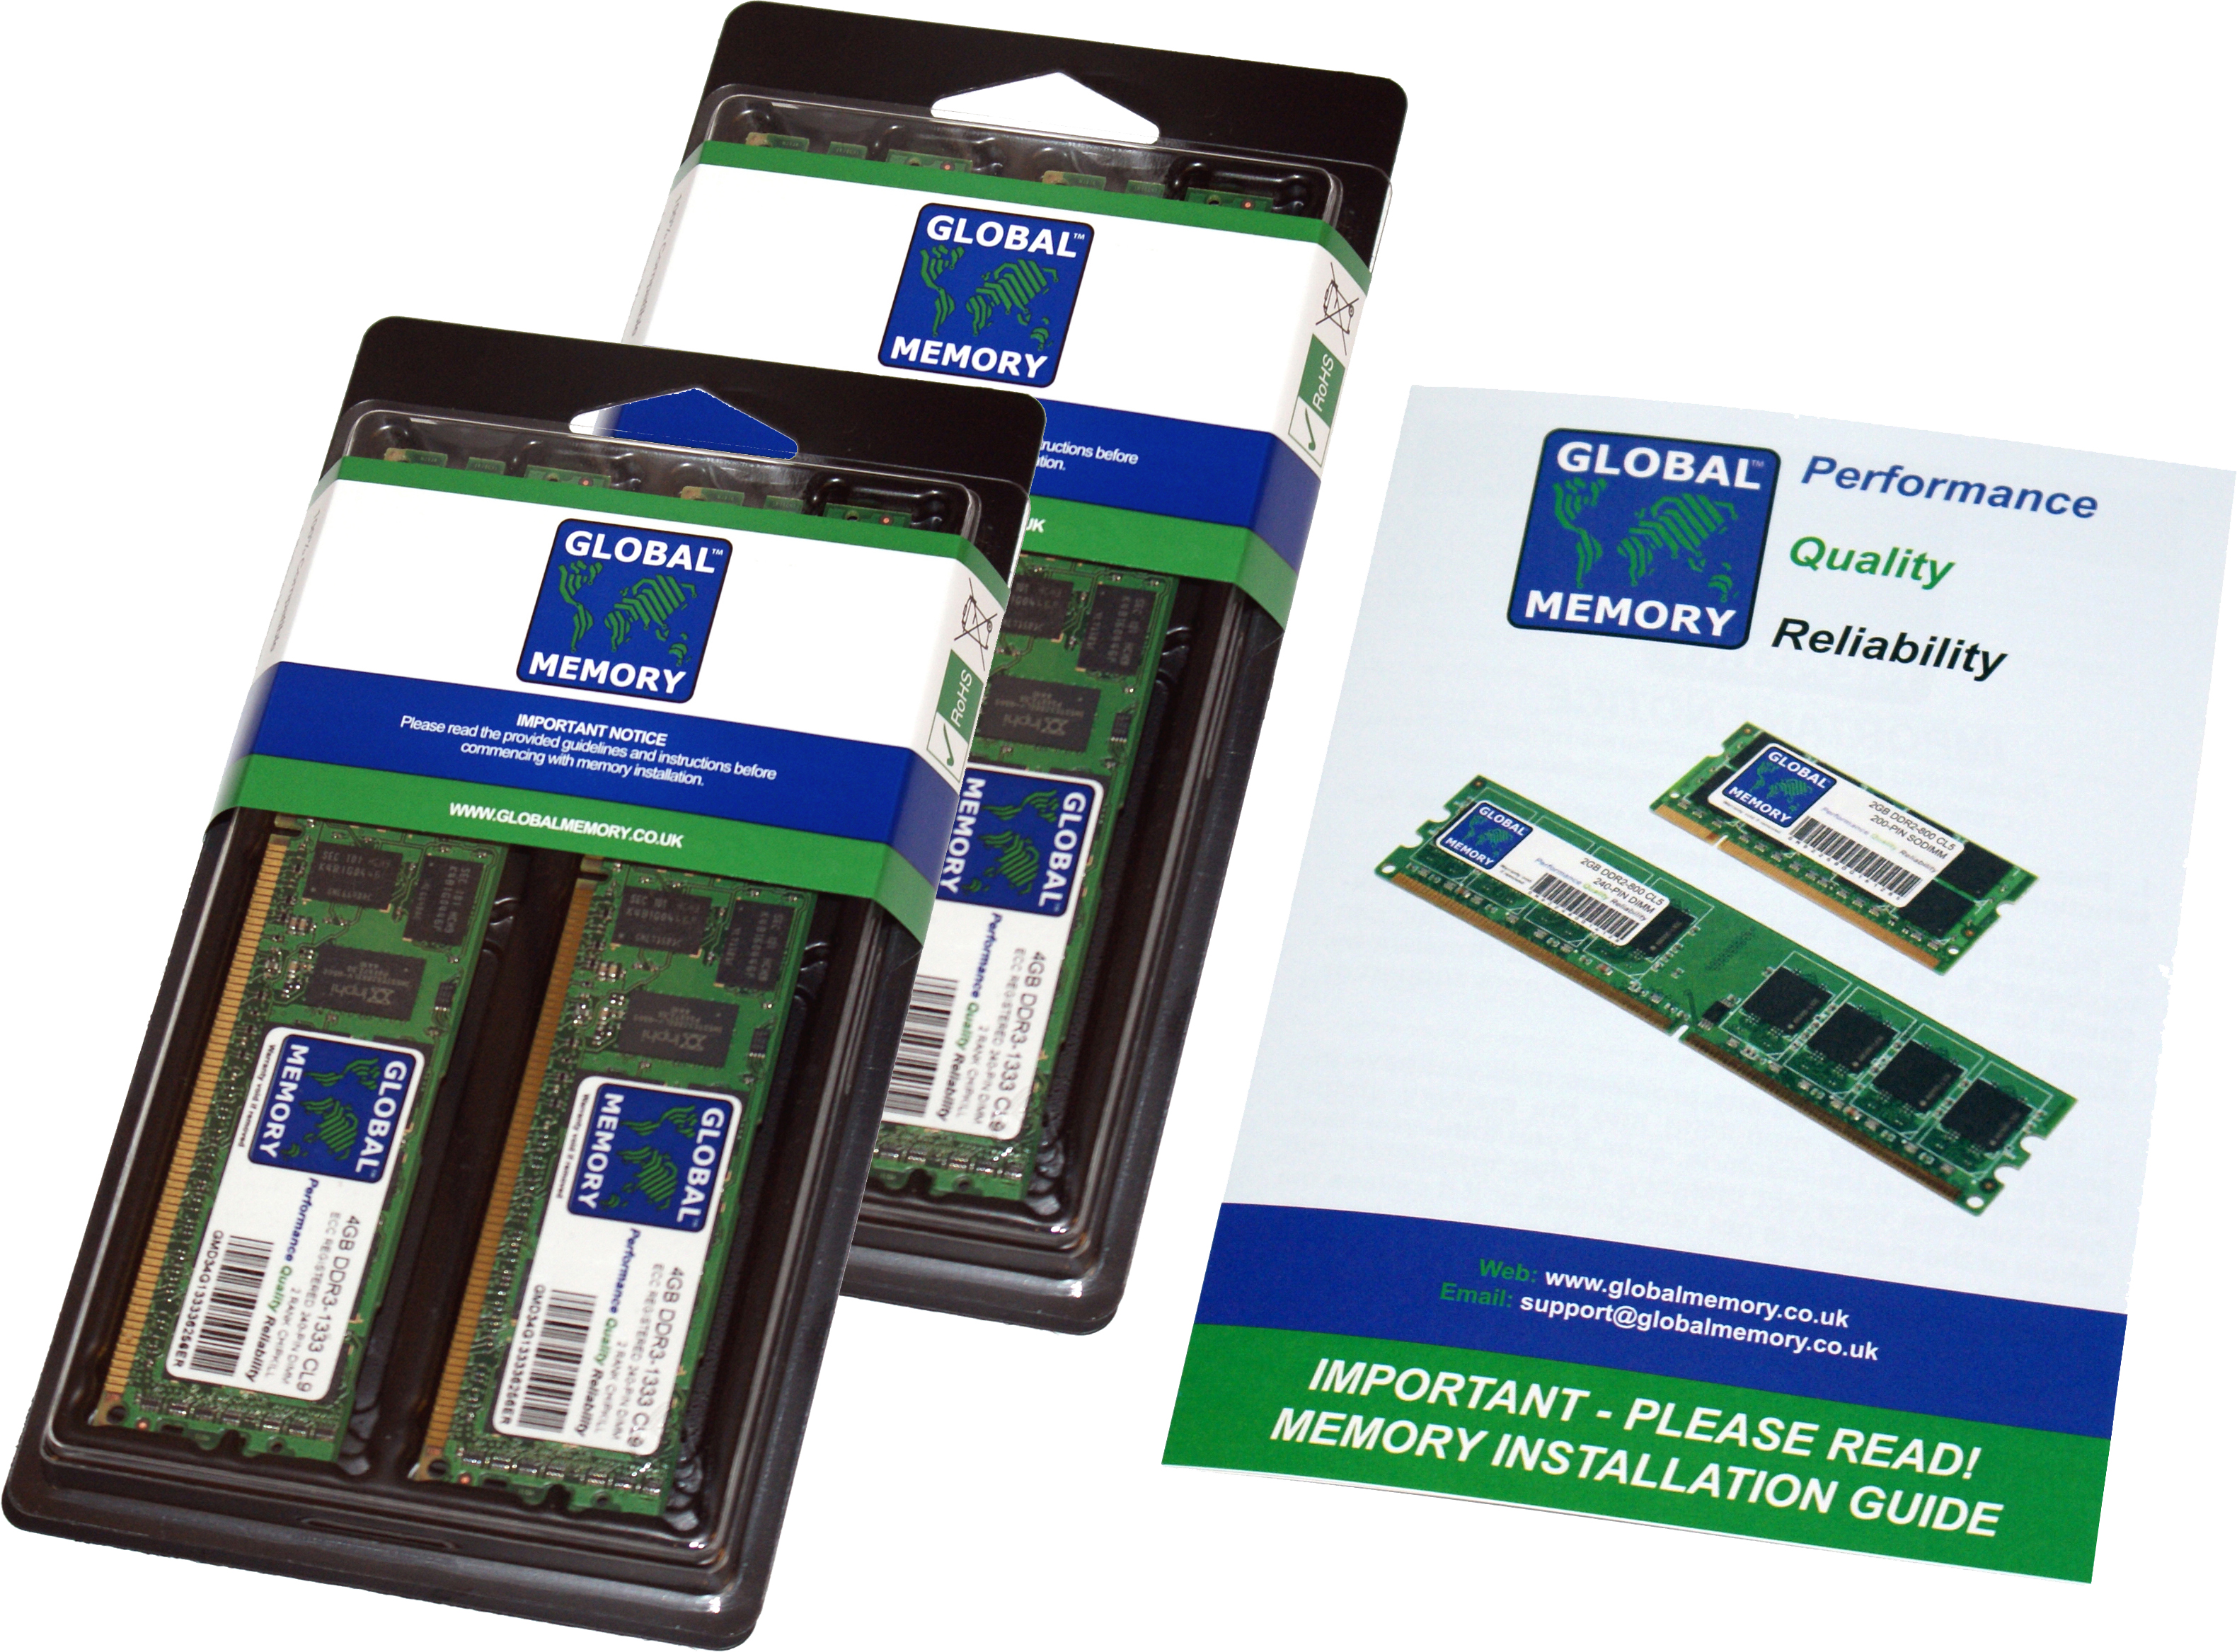 128GB (4 x 32GB) DDR4 2133MHz PC4-17000 288-PIN ECC REGISTERED DIMM (RDIMM) MEMORY RAM KIT FOR ACER SERVERS/WORKSTATIONS (16 RANK KIT CHIPKILL)